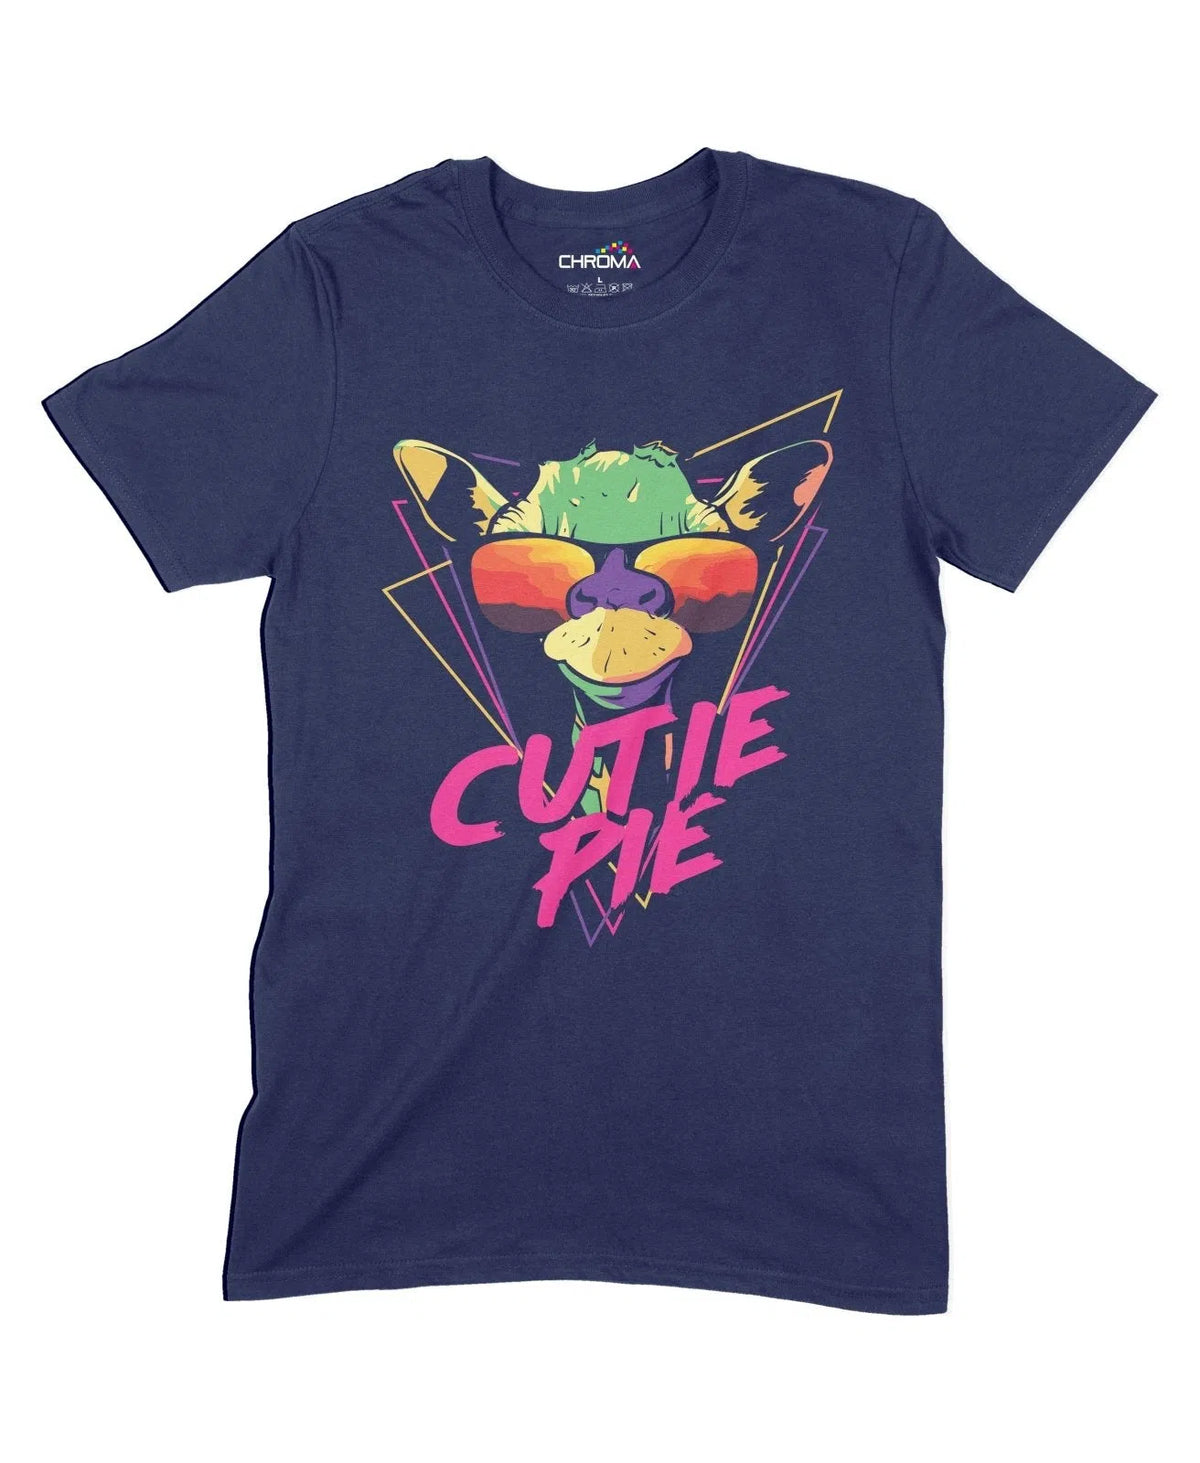 Cutie Pie Retro Unisex Adult T-Shirt | Premium Quality Streetwear Chroma Clothing